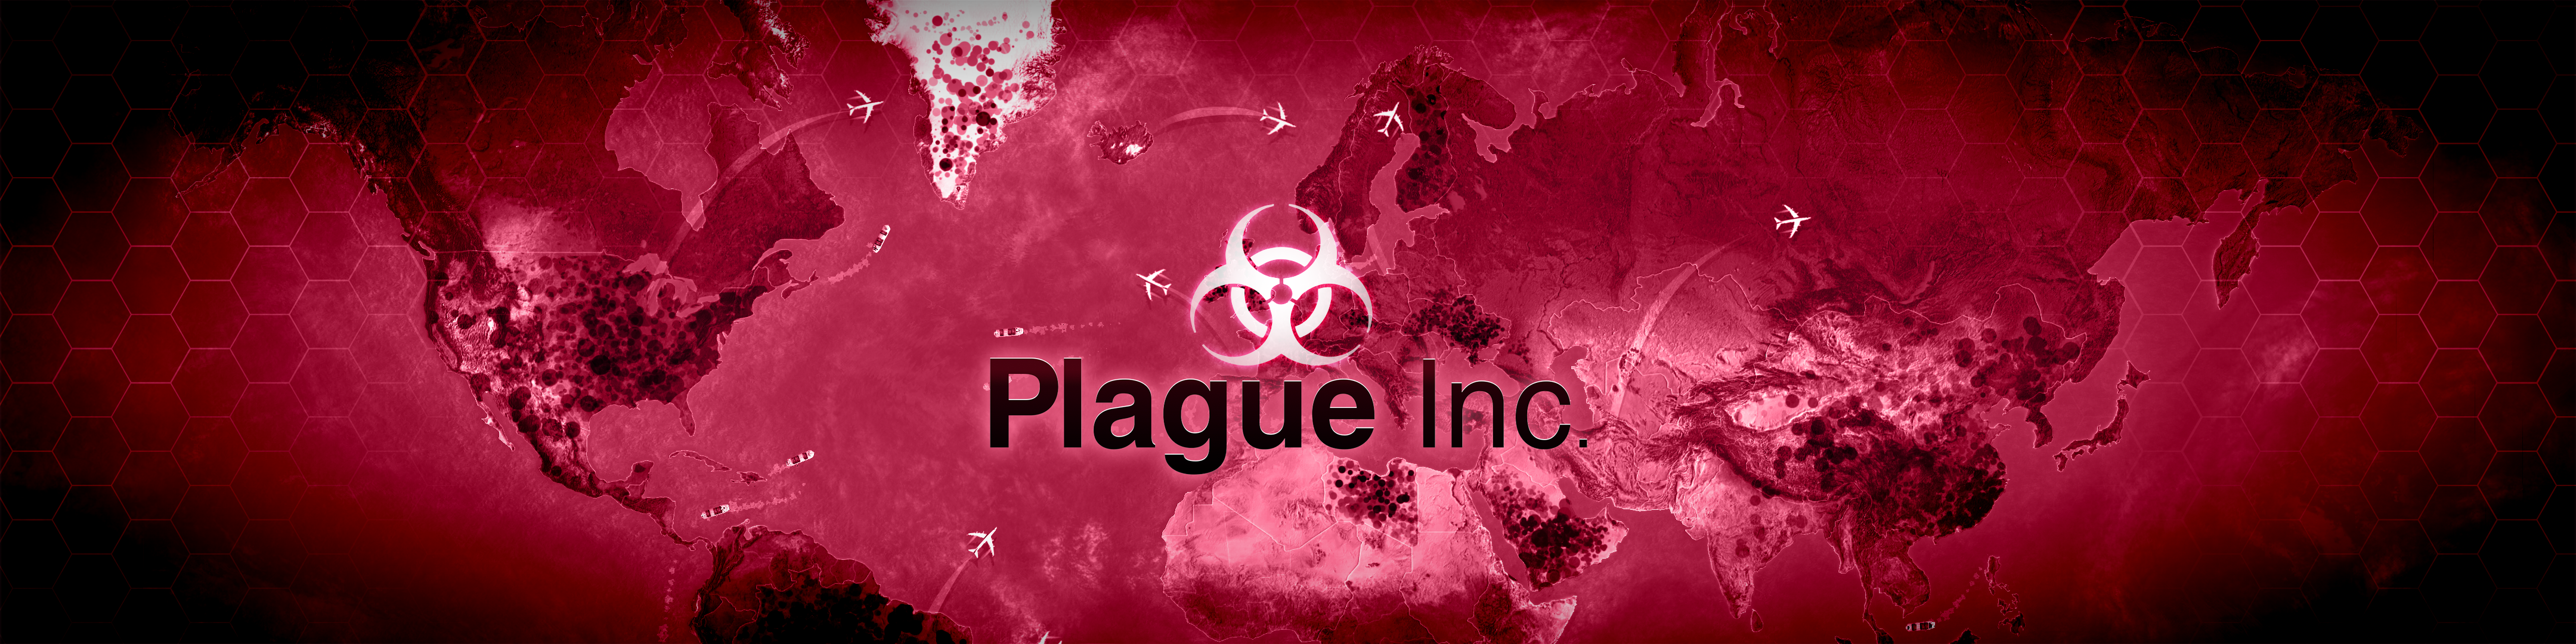 Plague Inc Overview Apple App Store Great Britain - escape from prison impossible roblox billon